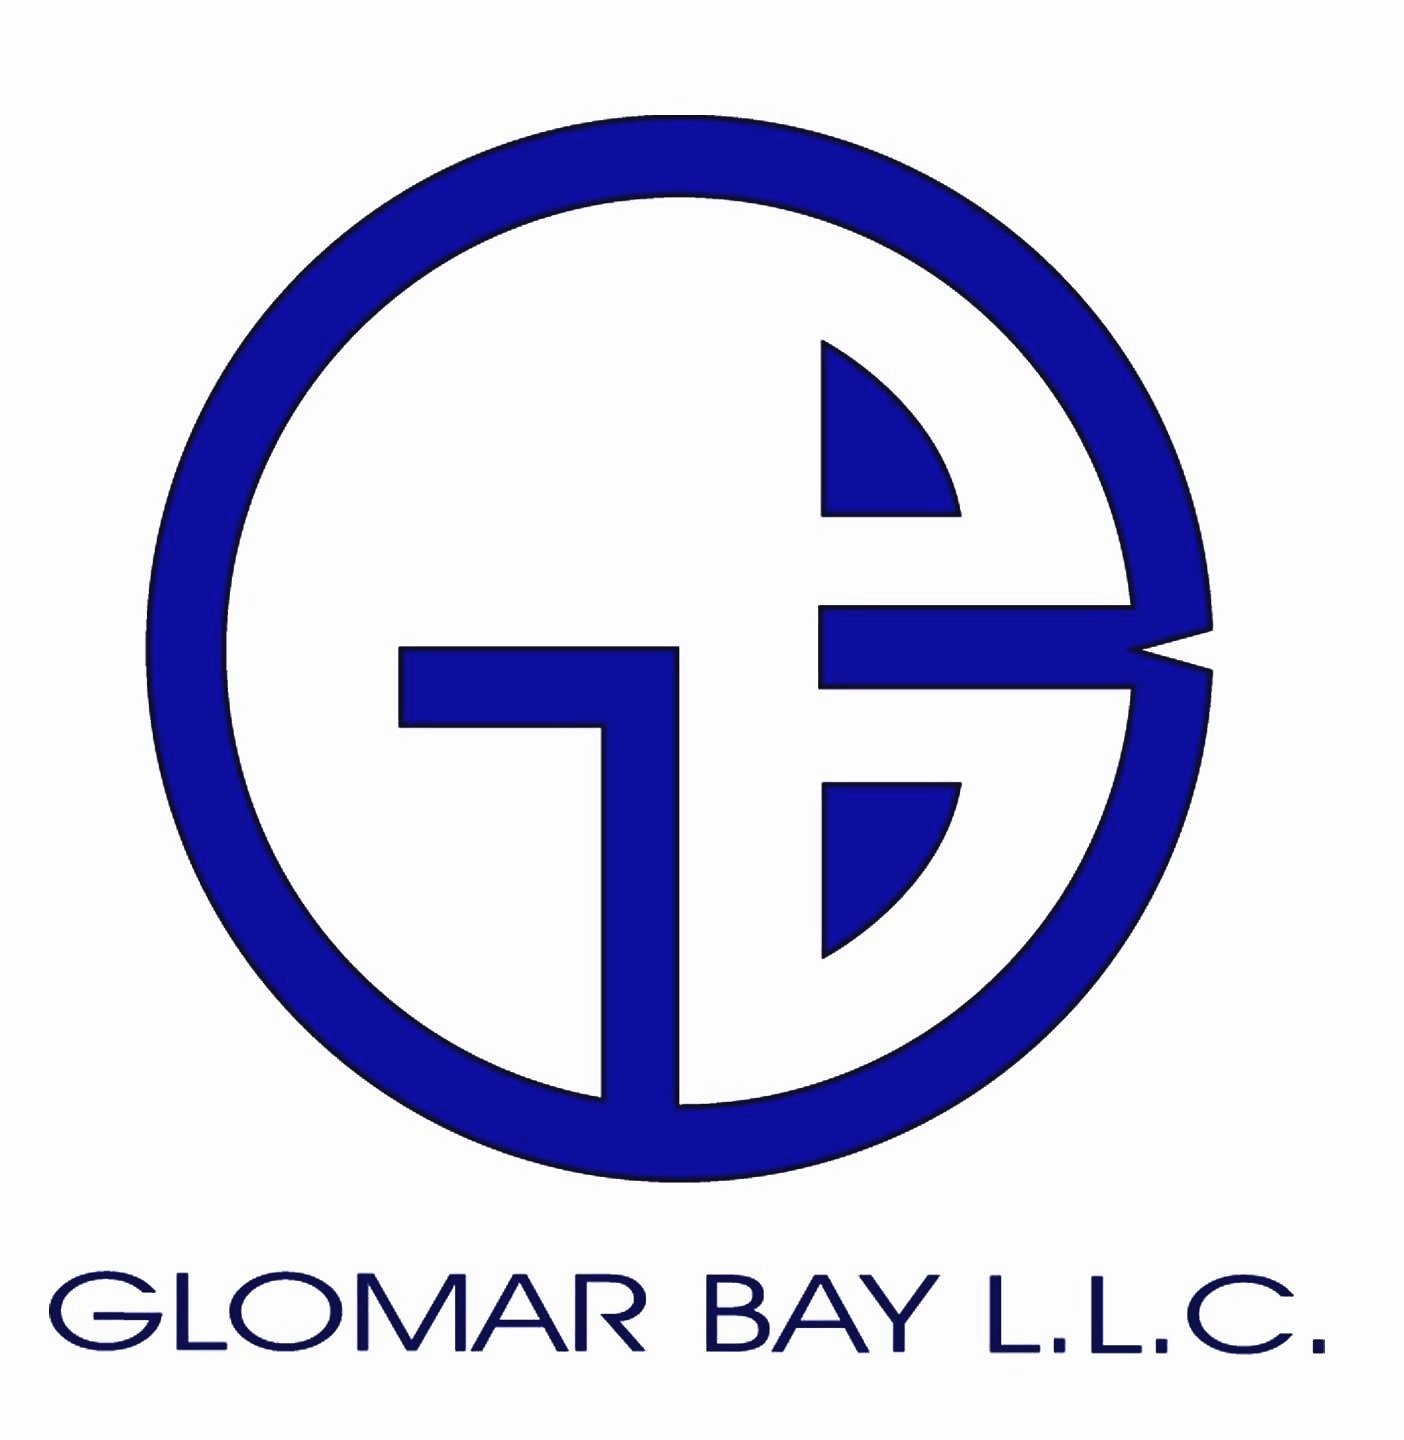 Glomar Bay, L.L.C.